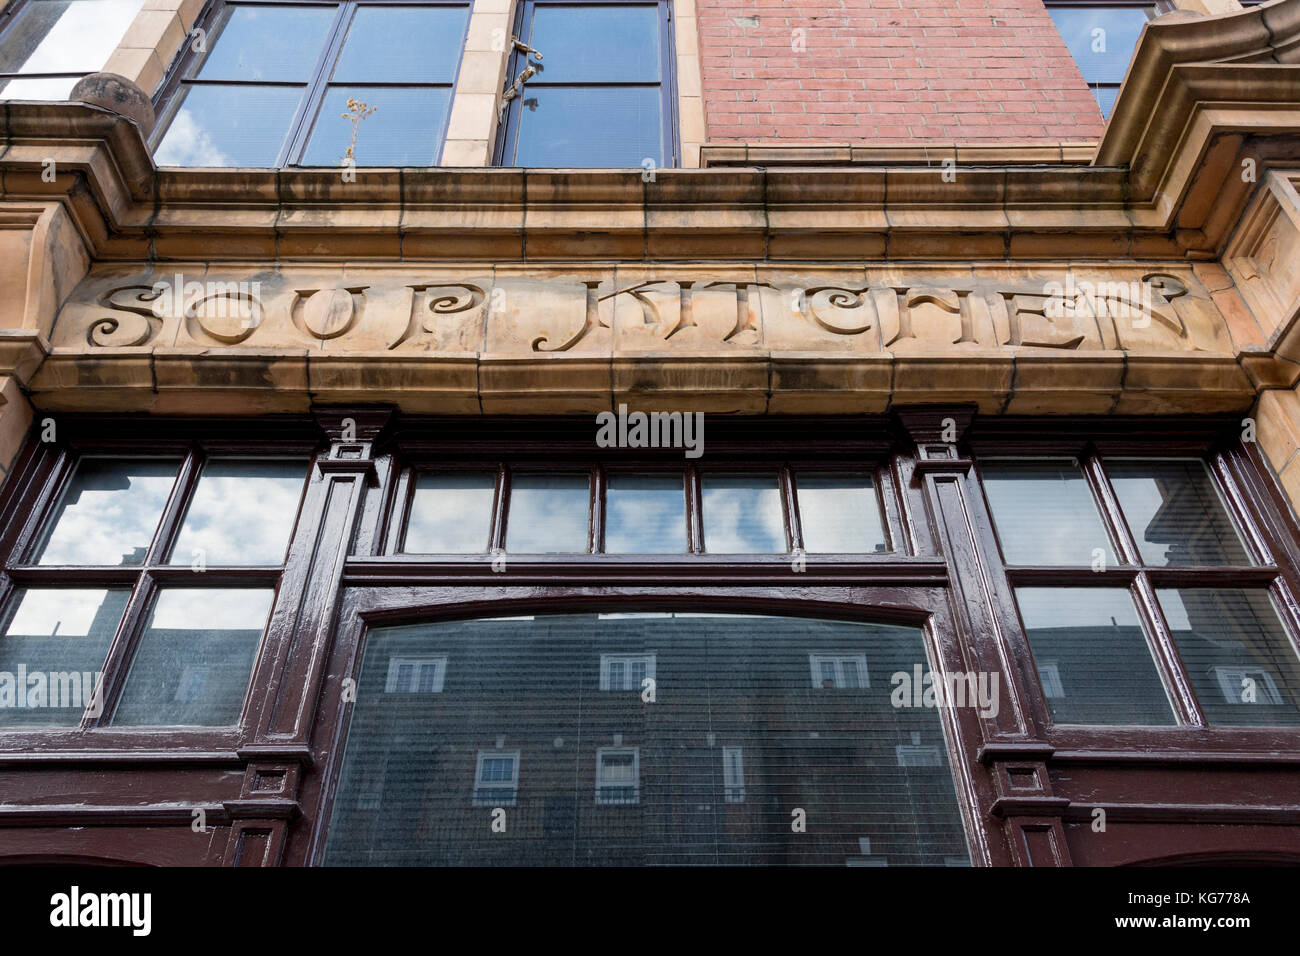 Exterior of the now defunct Jewish Soup Kitchen on Brune Street, Spitalfields, London, UK Stock Photo